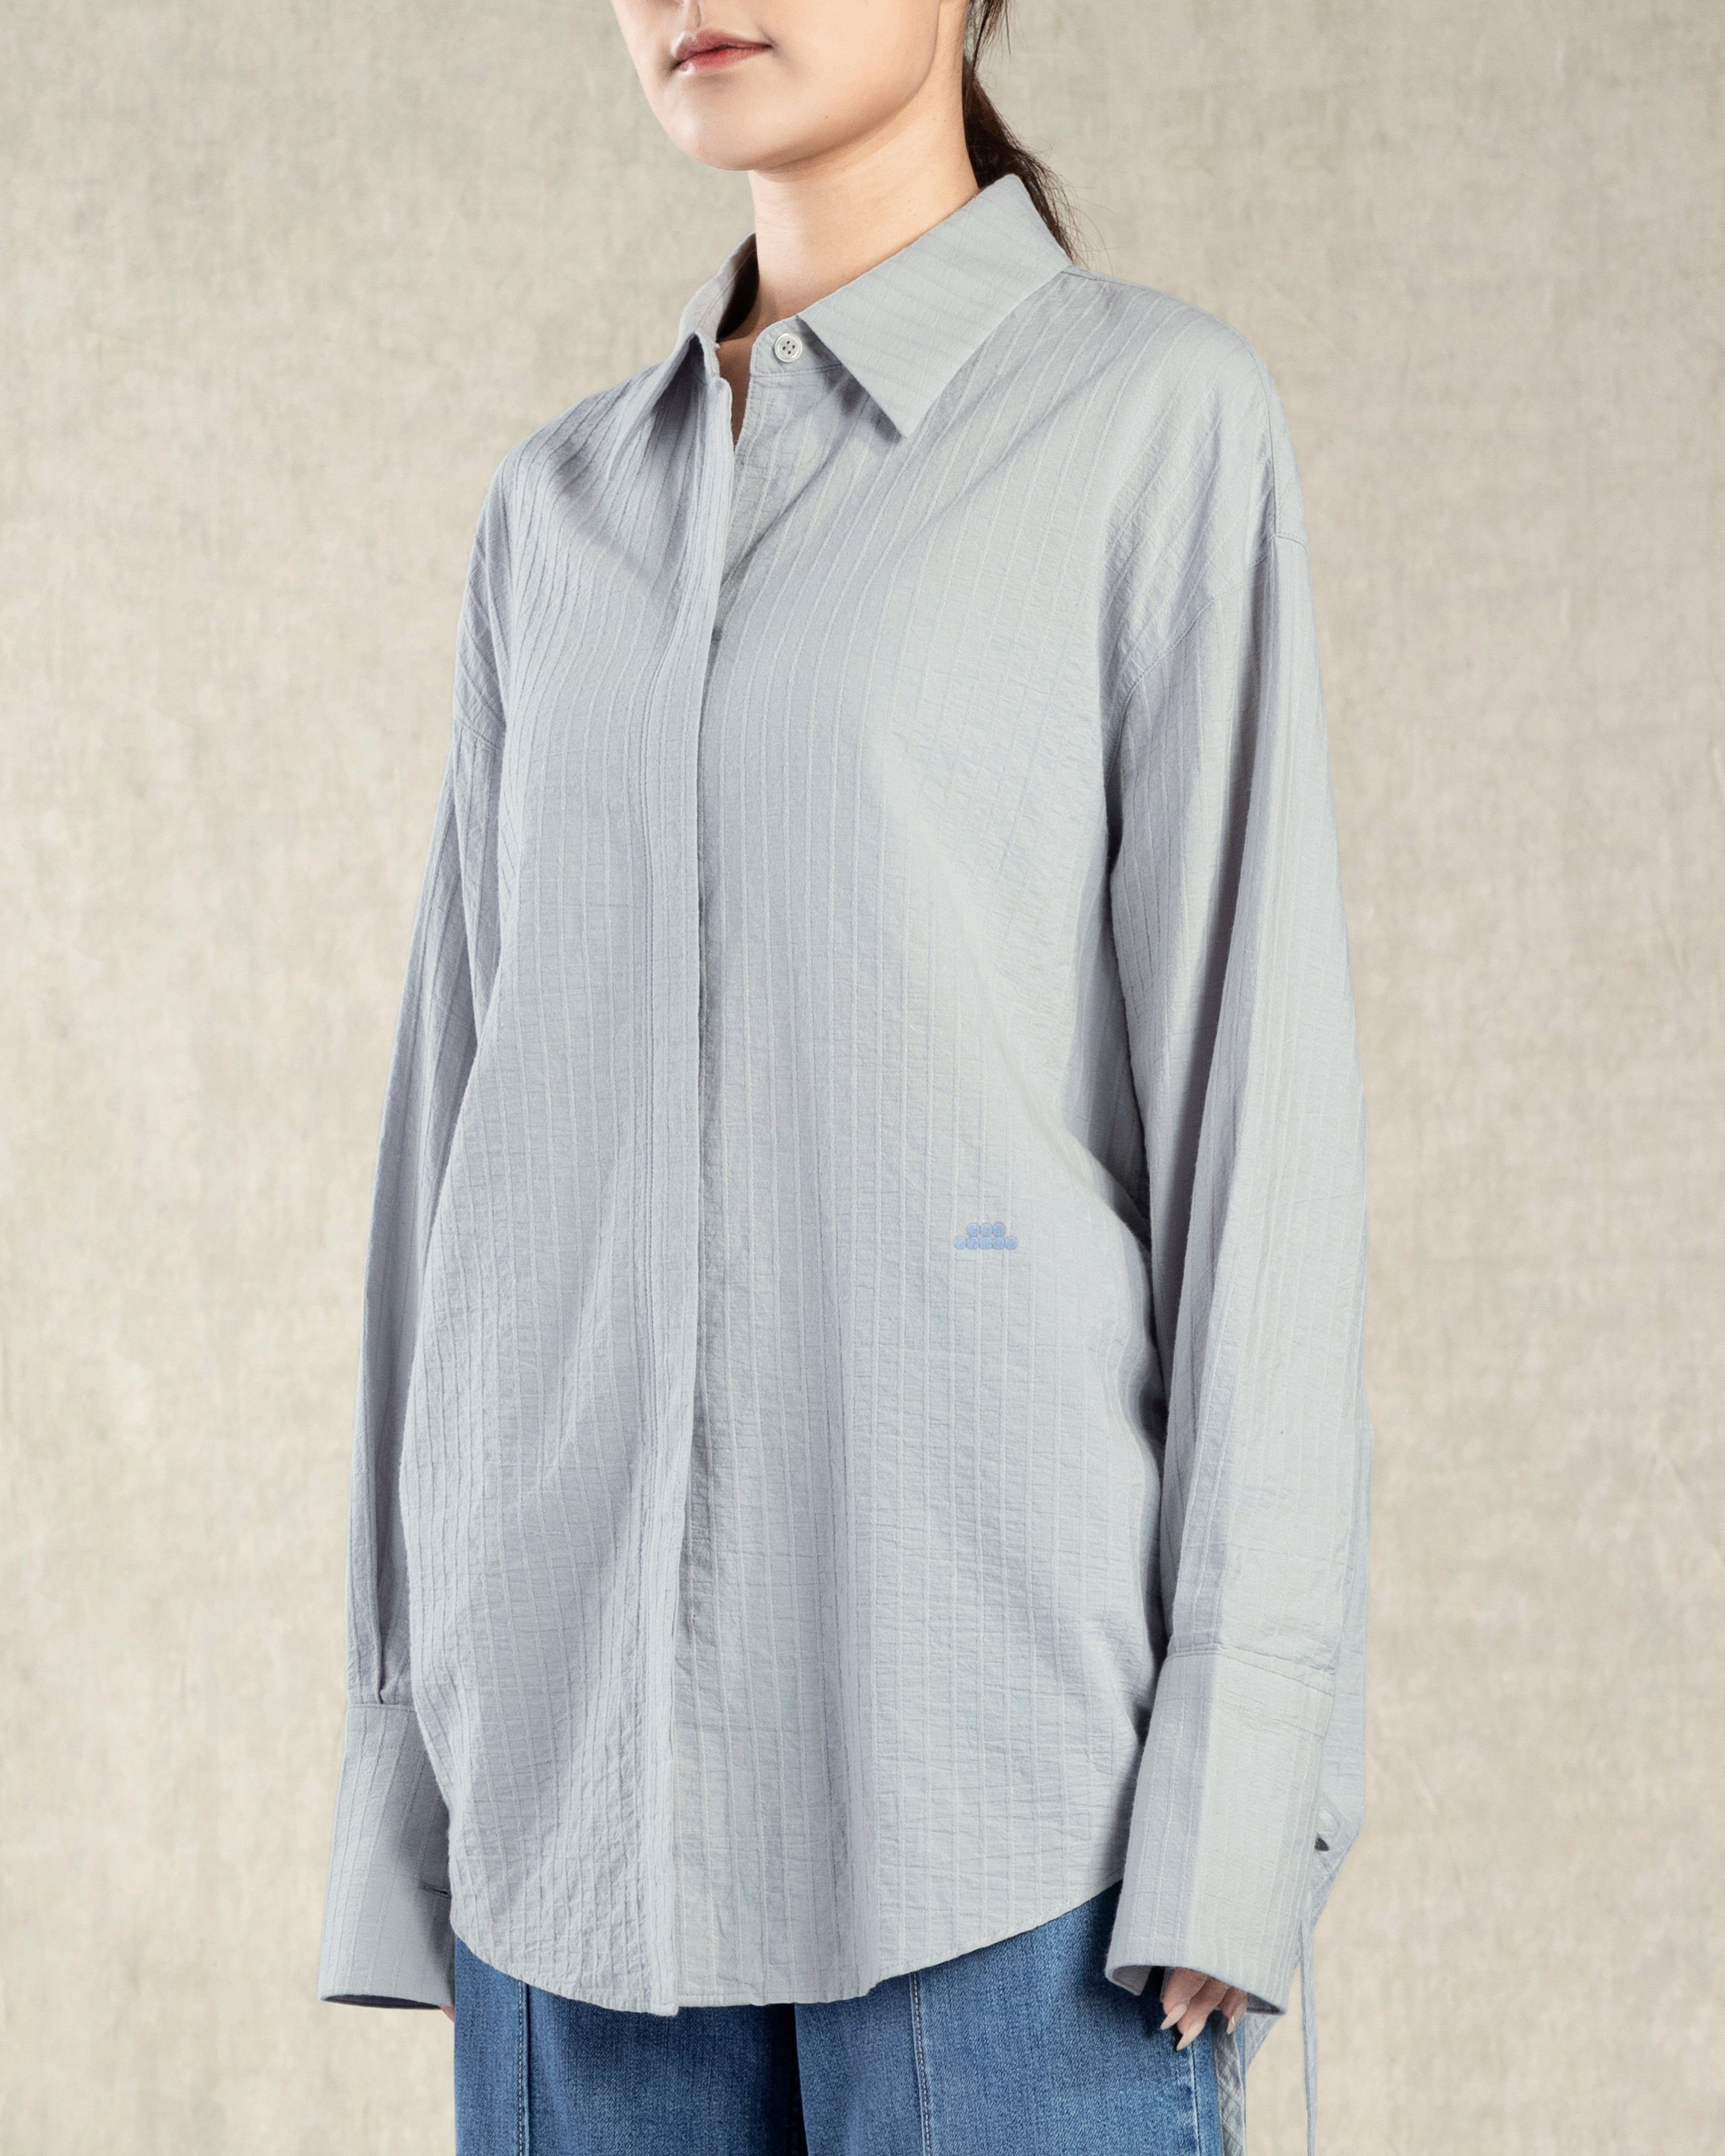 Flint Grey Wrap Dobby Shirt Womens Collared Tie Feature Shirt